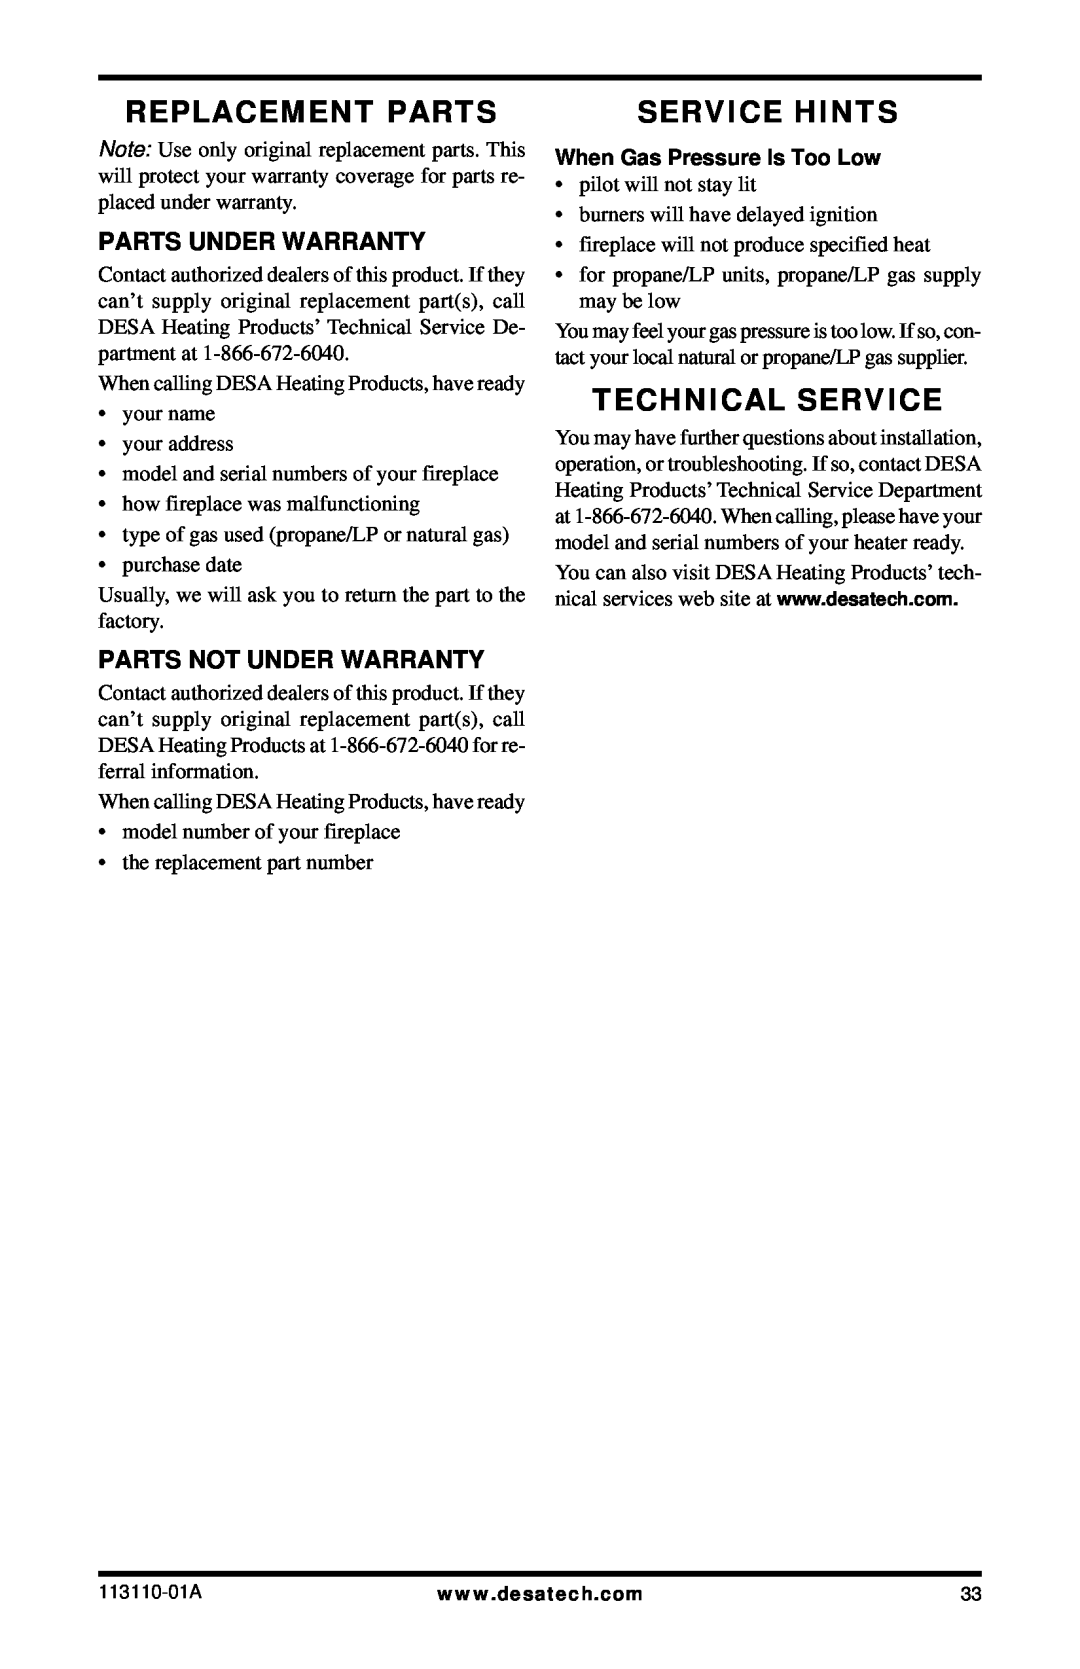 Desa EFS26PRA Replacement Parts, Service Hints, Technical Service, Parts Under Warranty, Parts Not Under Warranty 